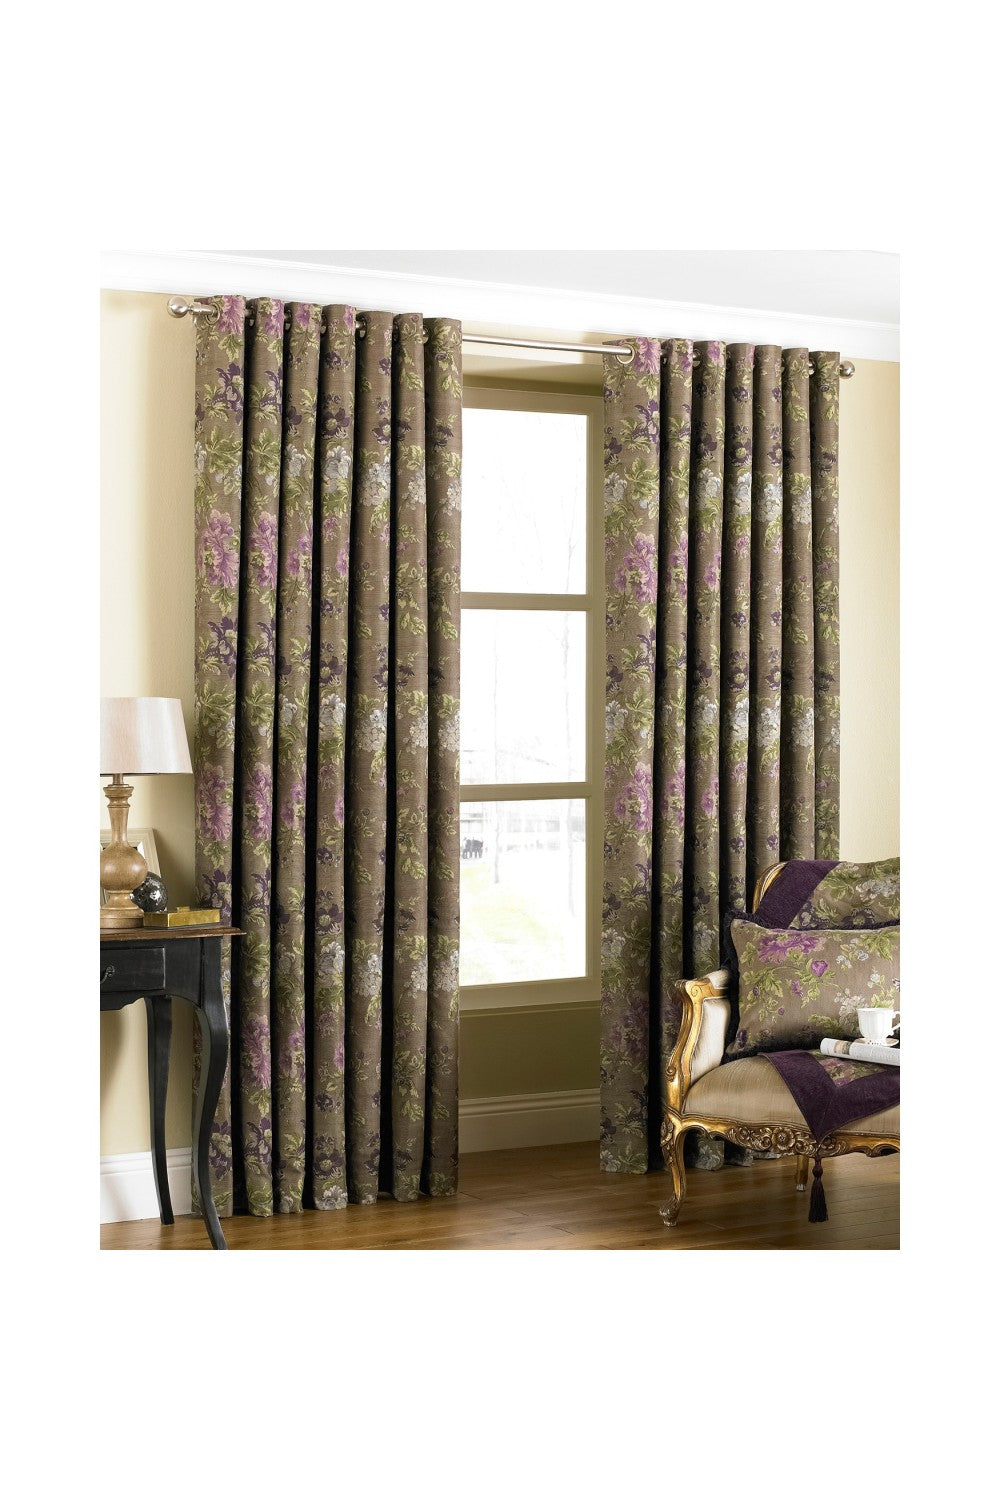 Riva Home Berkshire Ringtop Curtains (Hyacinth) (66 x 72 inch)